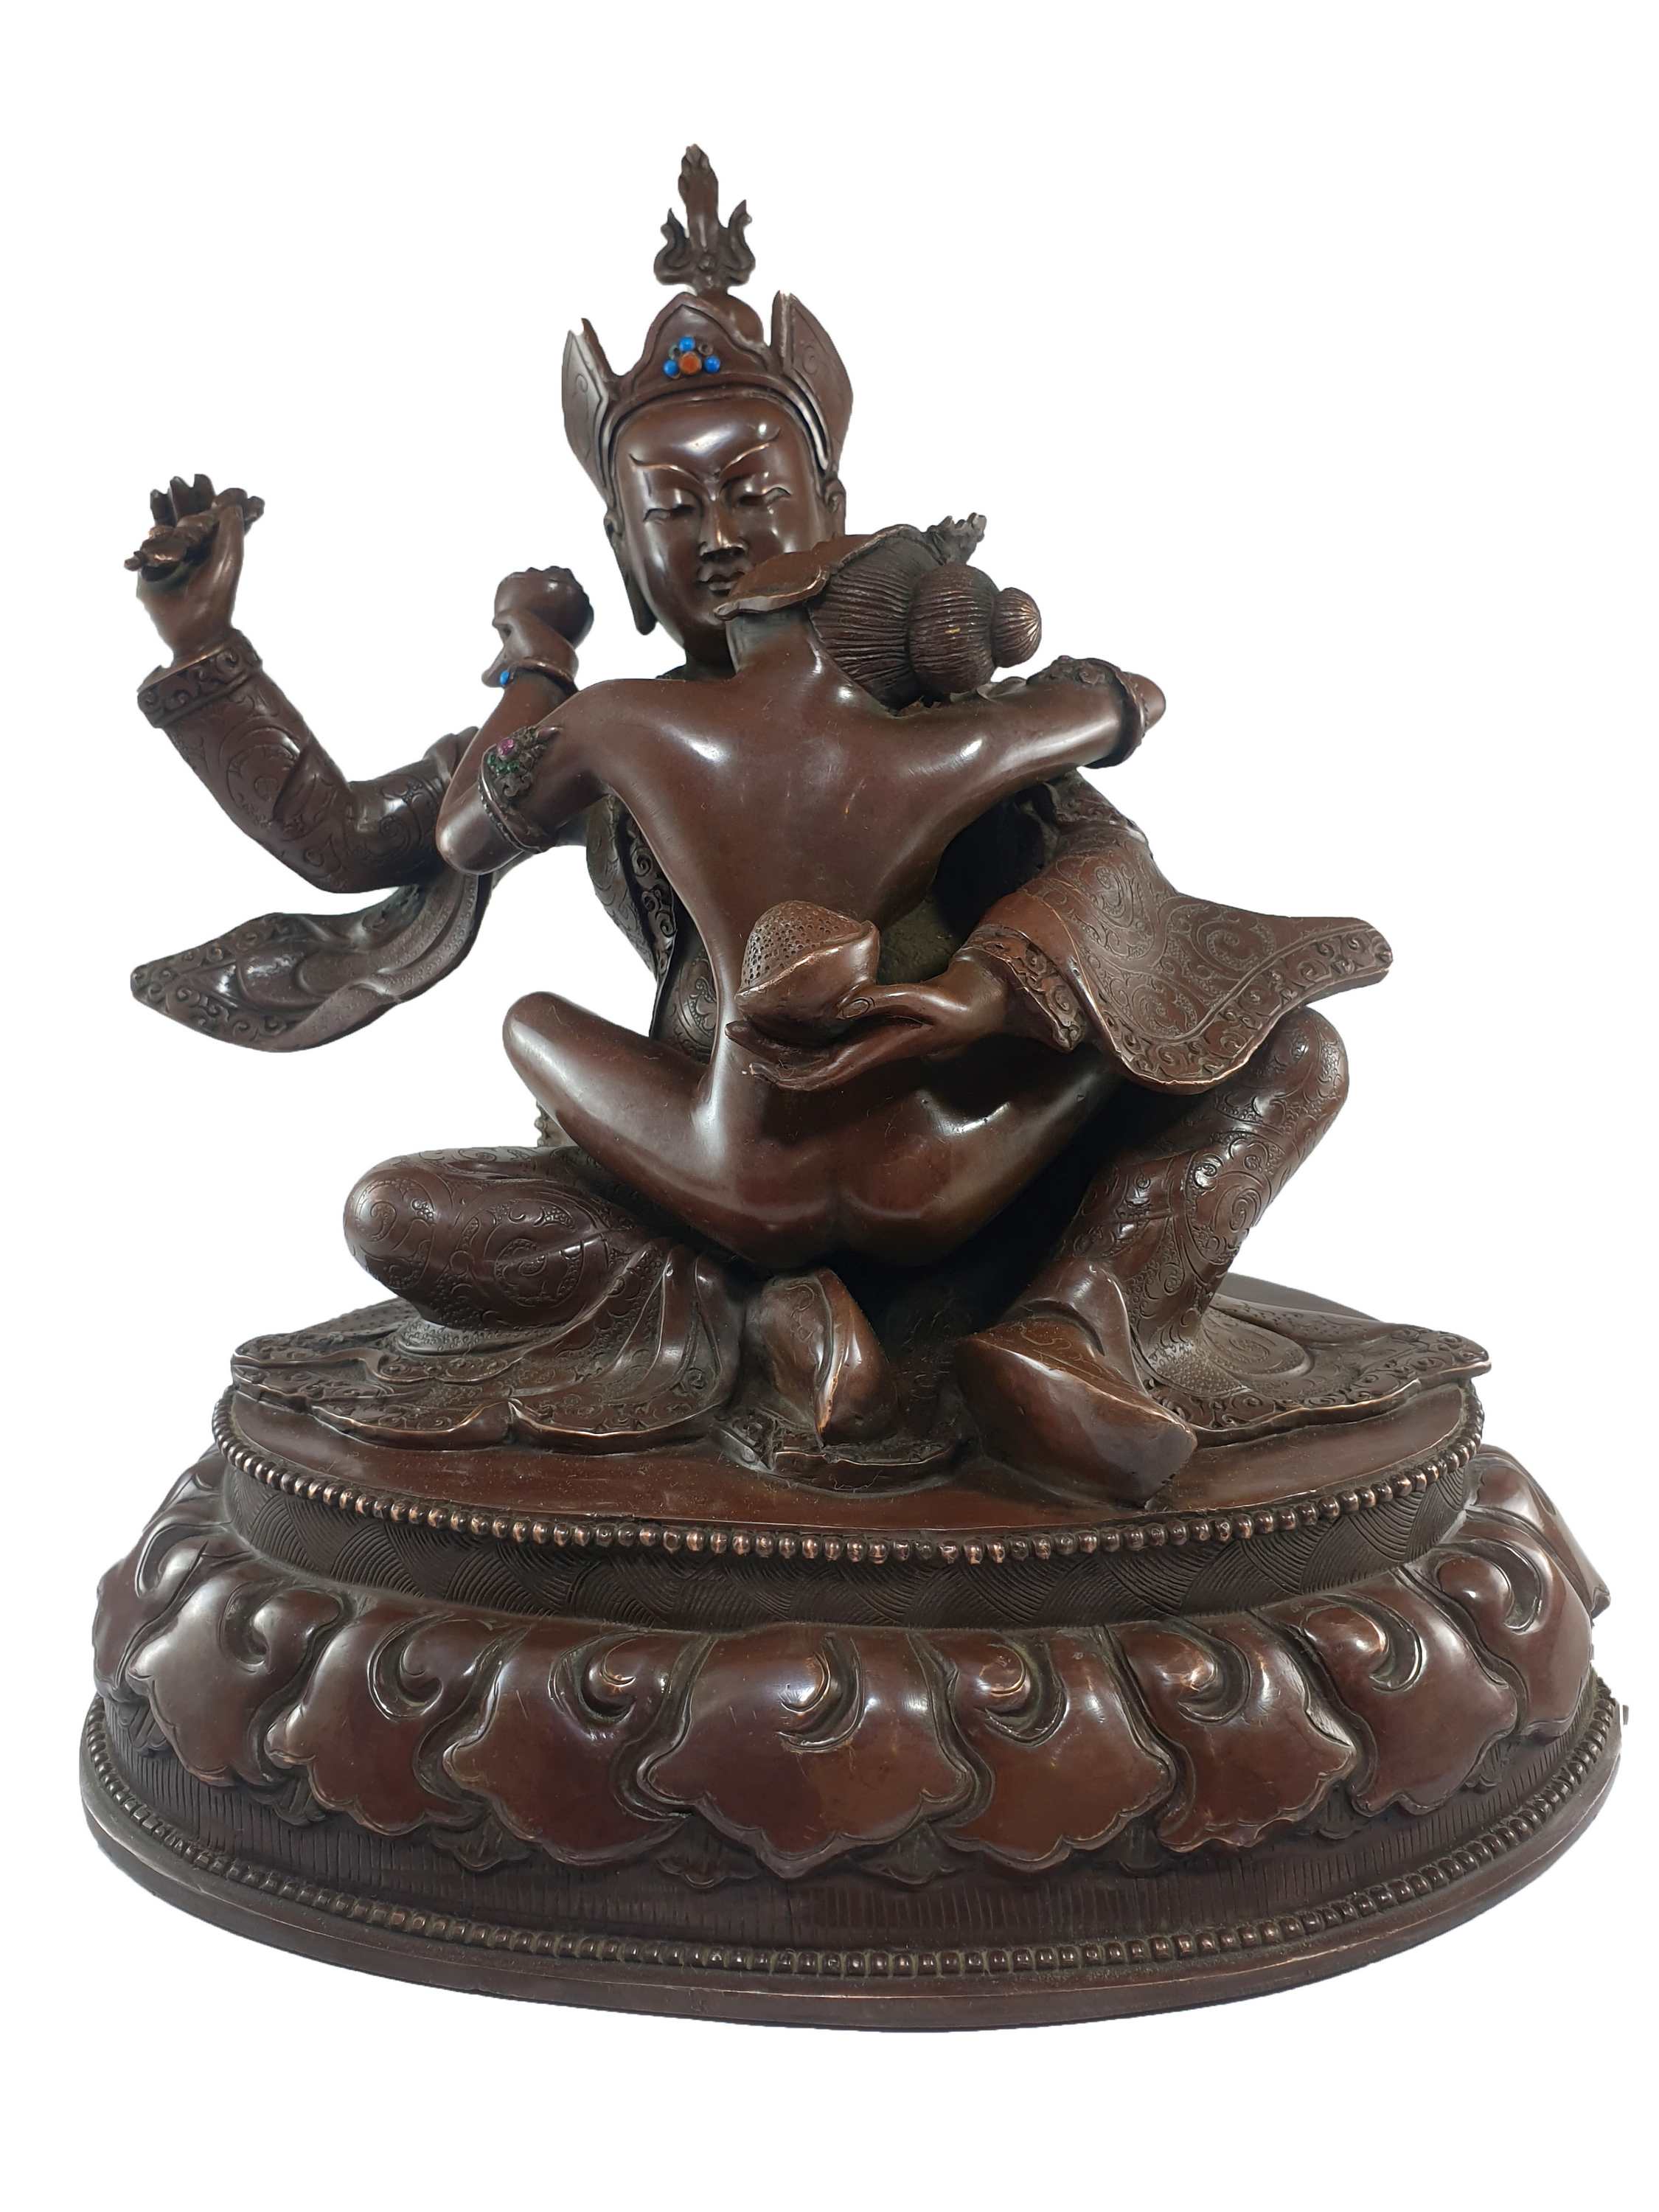 hq Buddhist Statue Of Guru Padmasambhava With Consort, shakti, Yab-yum copper Plated, chocolate Oxidized